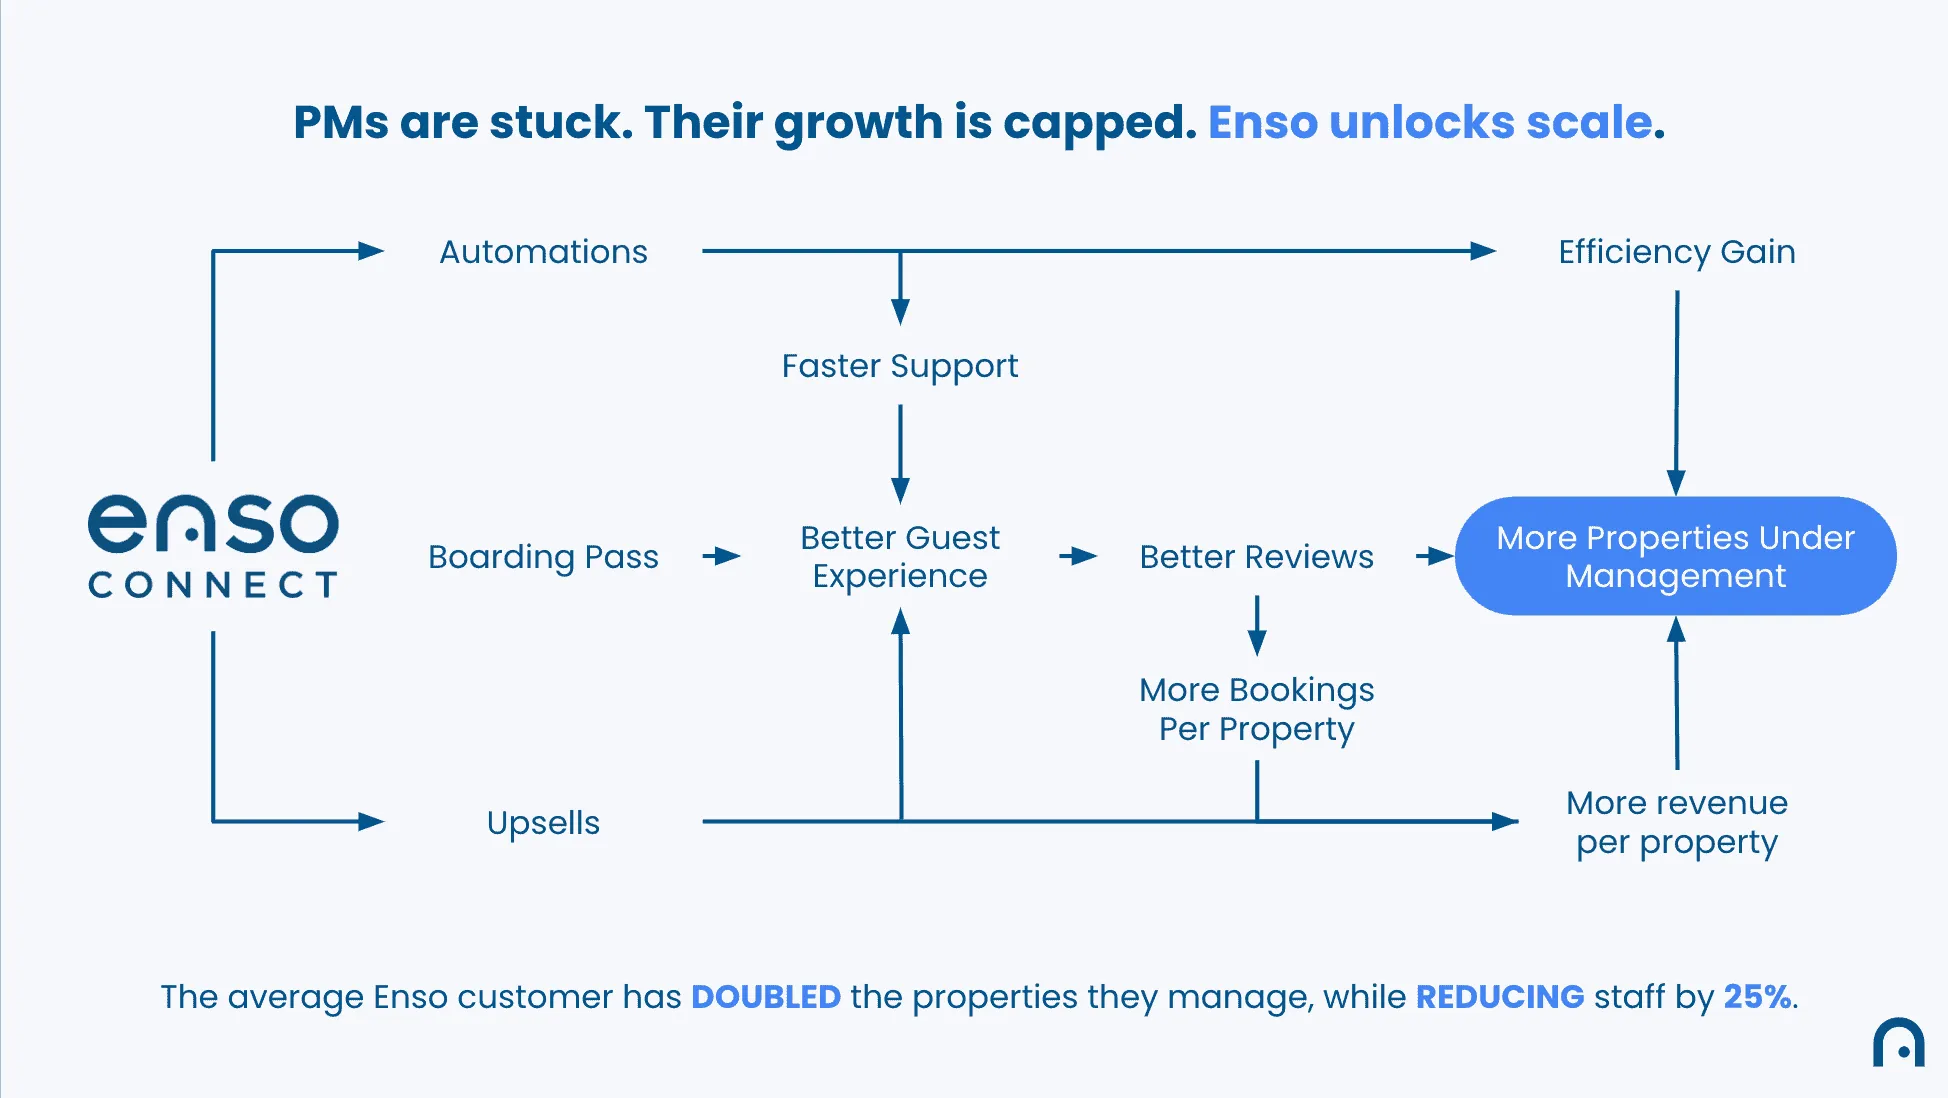 Enso Connect Unlocks Scale